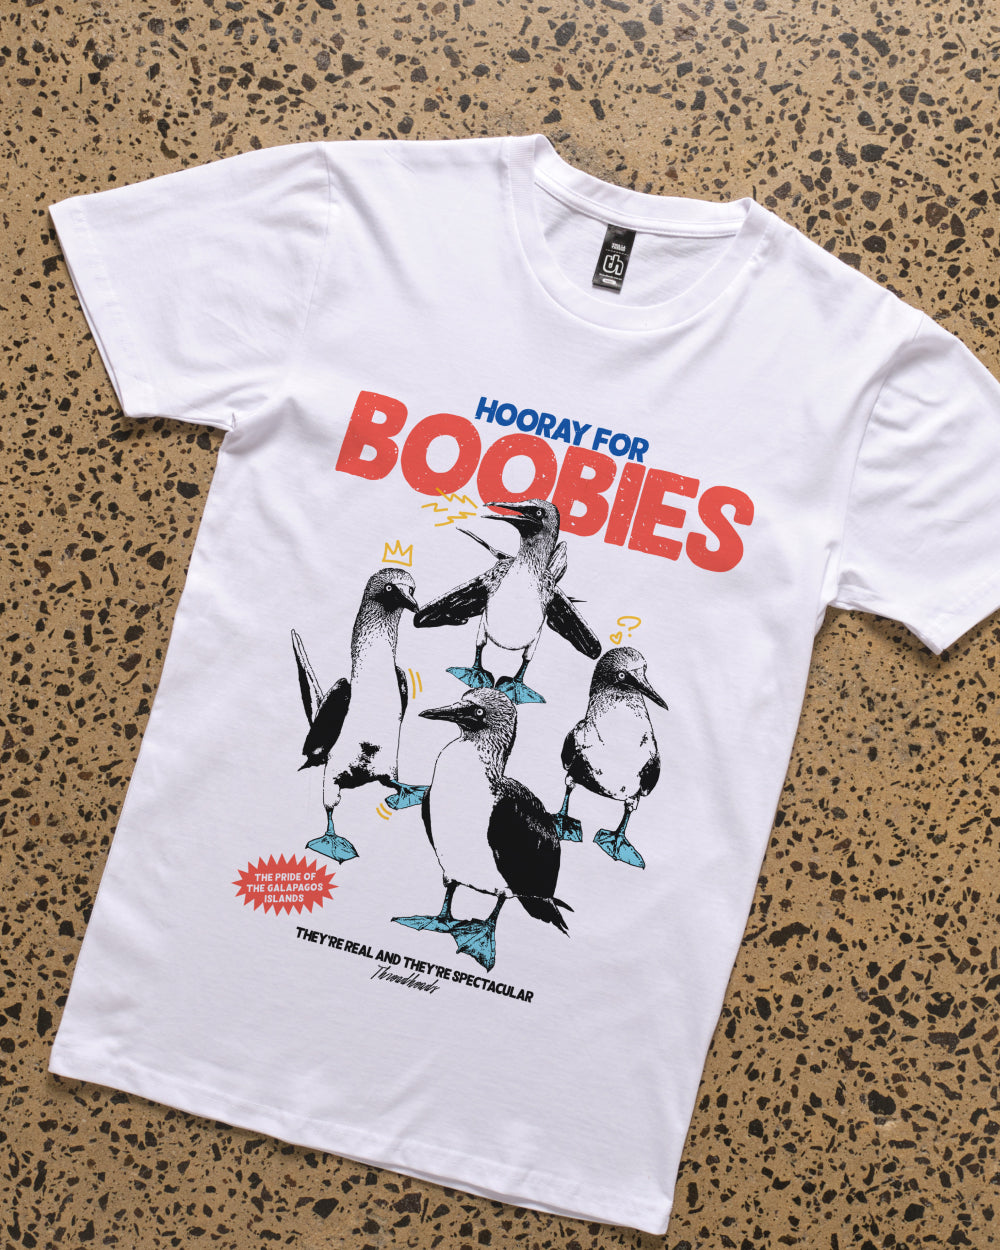 Hooray for Boobies T-Shirt